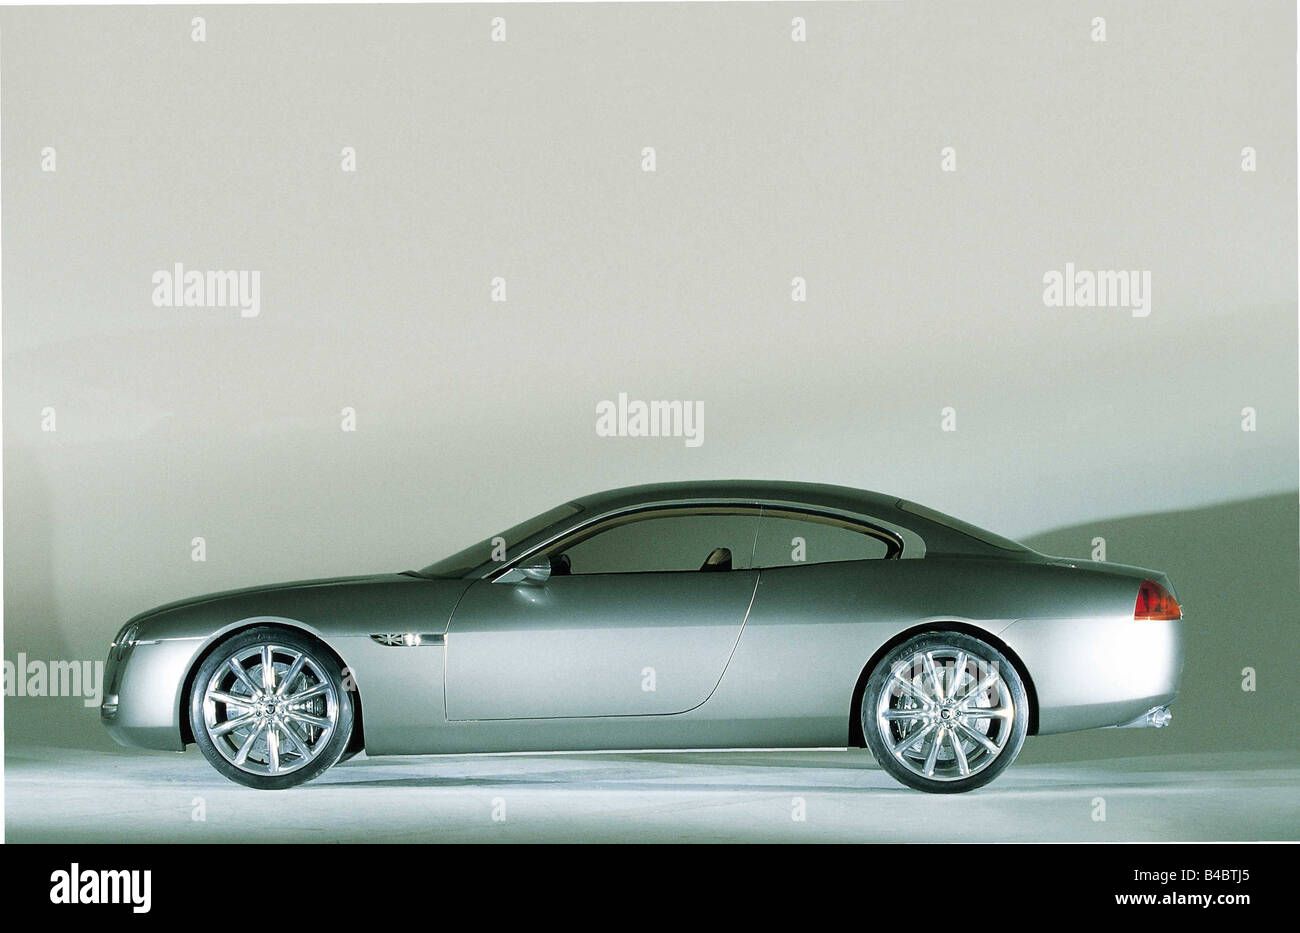 Auto, Studie, Jaguar R-Coupe, Silber, Seitenansicht, Modelljahr 2001, Studio-Aufnahme, Ams 19/2001, Seite 018 Stockfoto